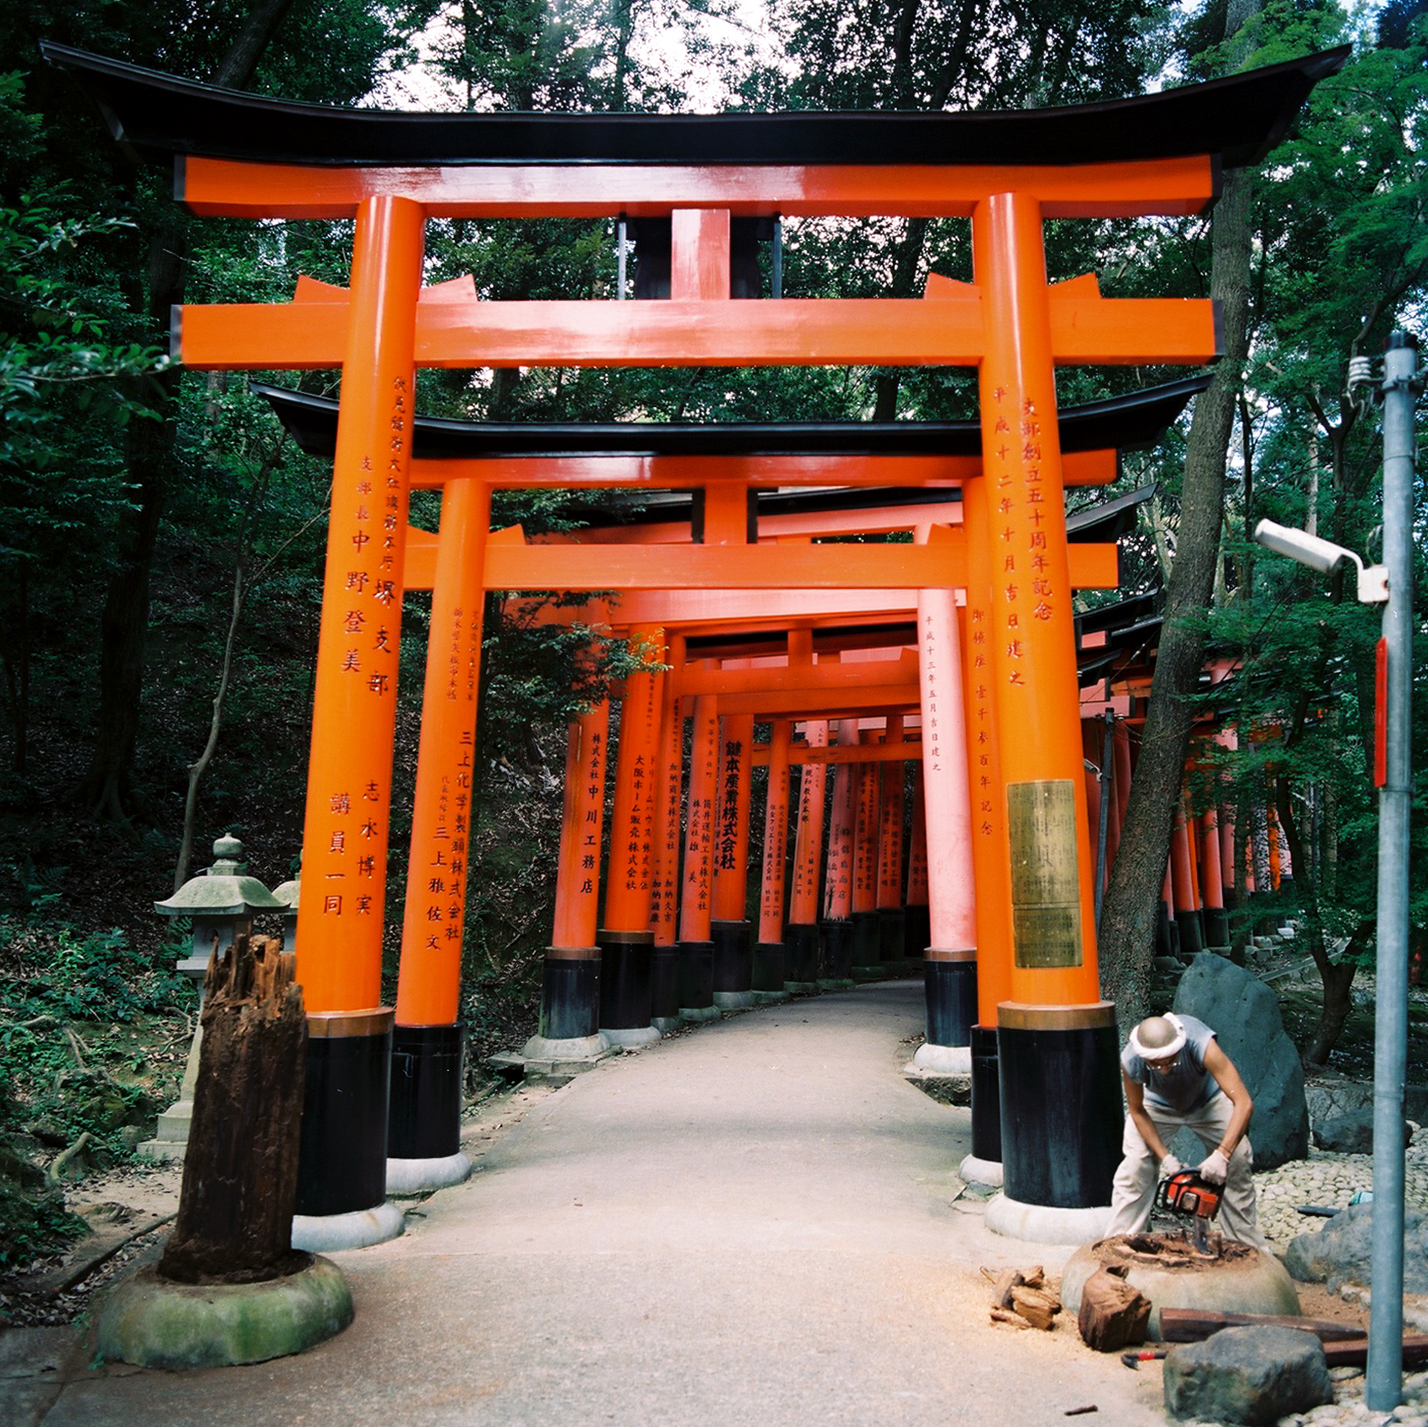  New Torii,  Fushimi Inari Taisha,  Fushimi-ku,  Kyoto, Japan 2012 